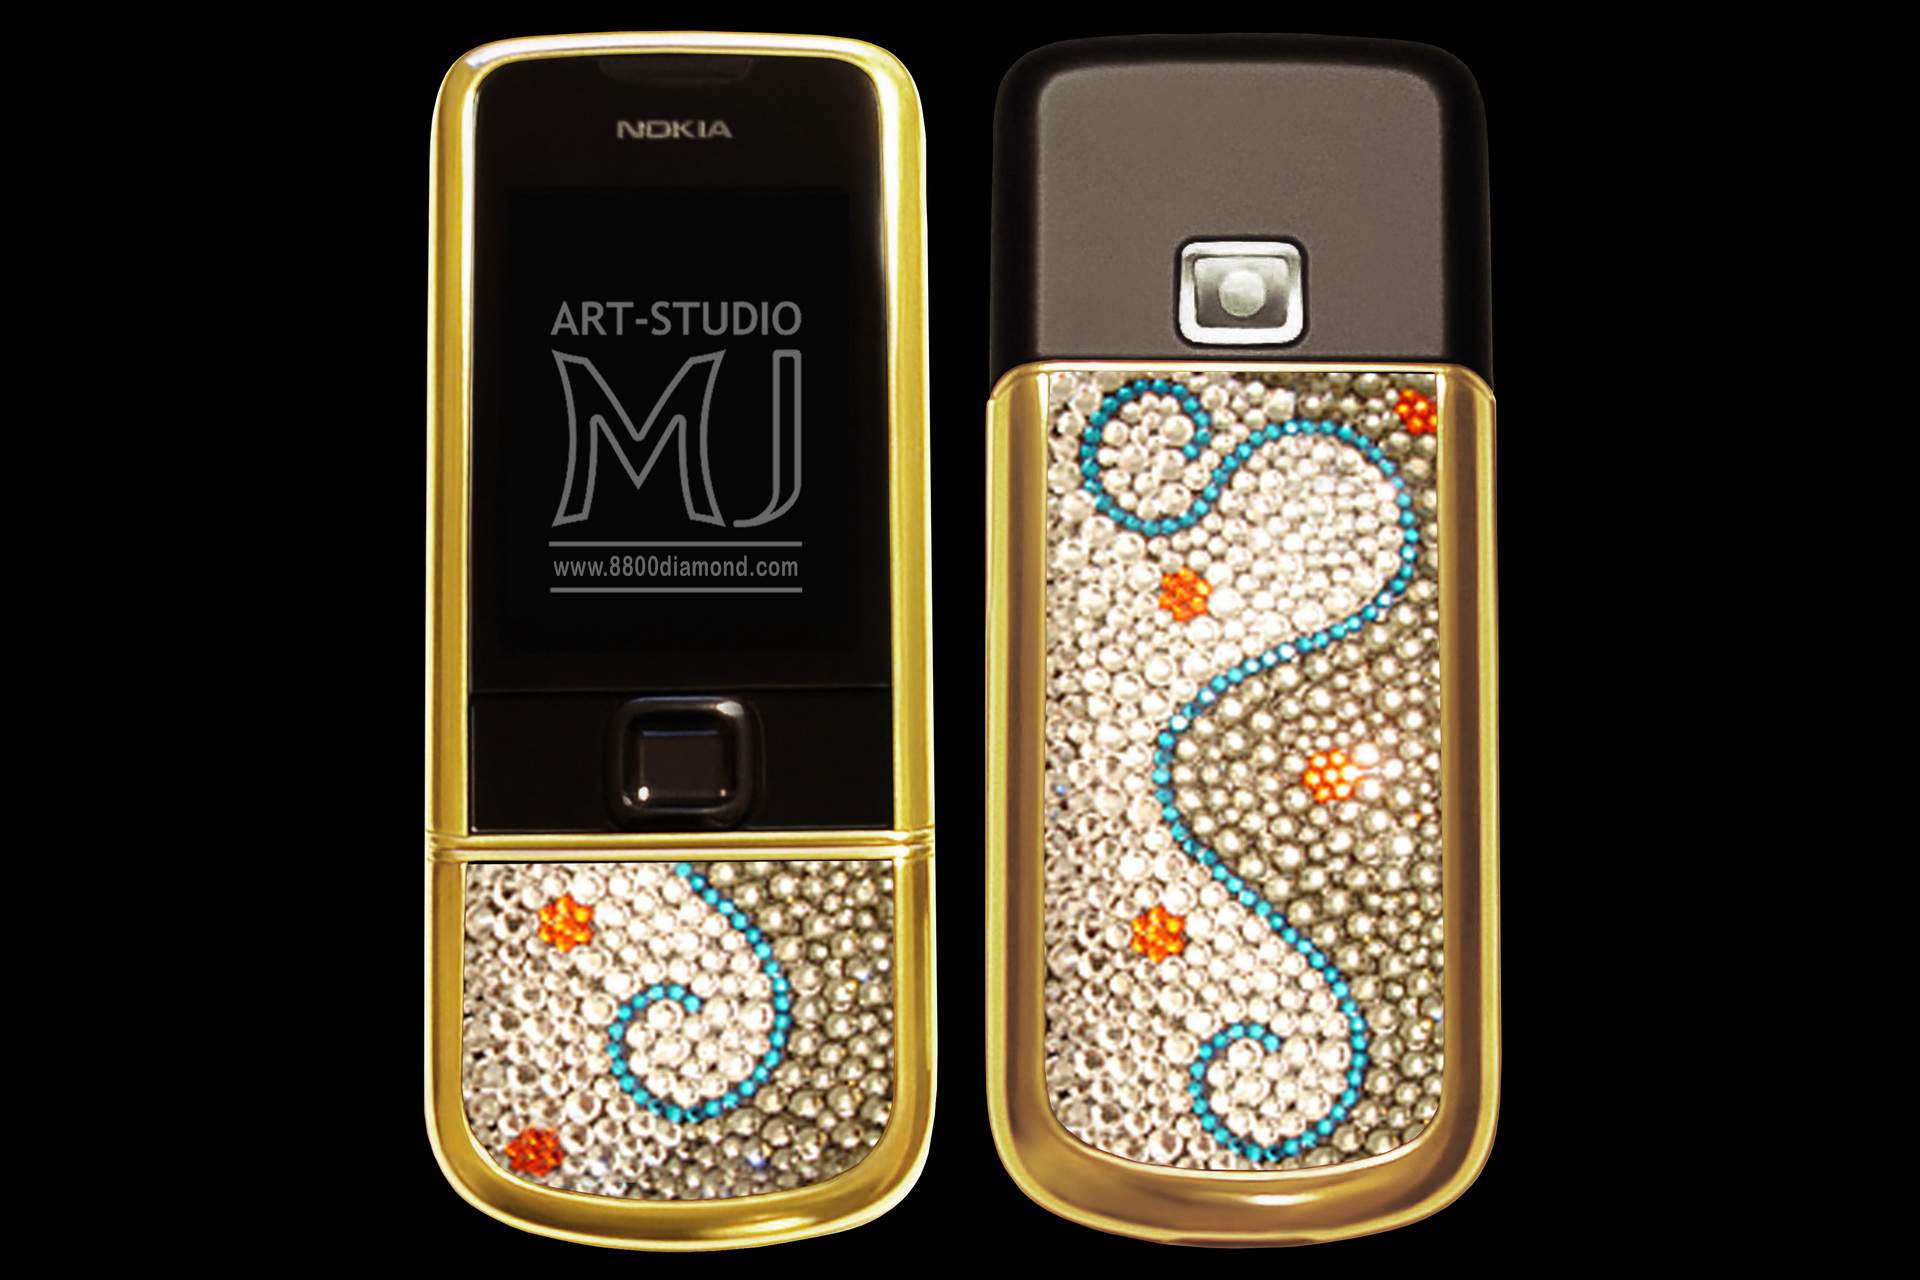 ARTSTUDIO MJ Jewelry work luxury items made of precious metals and